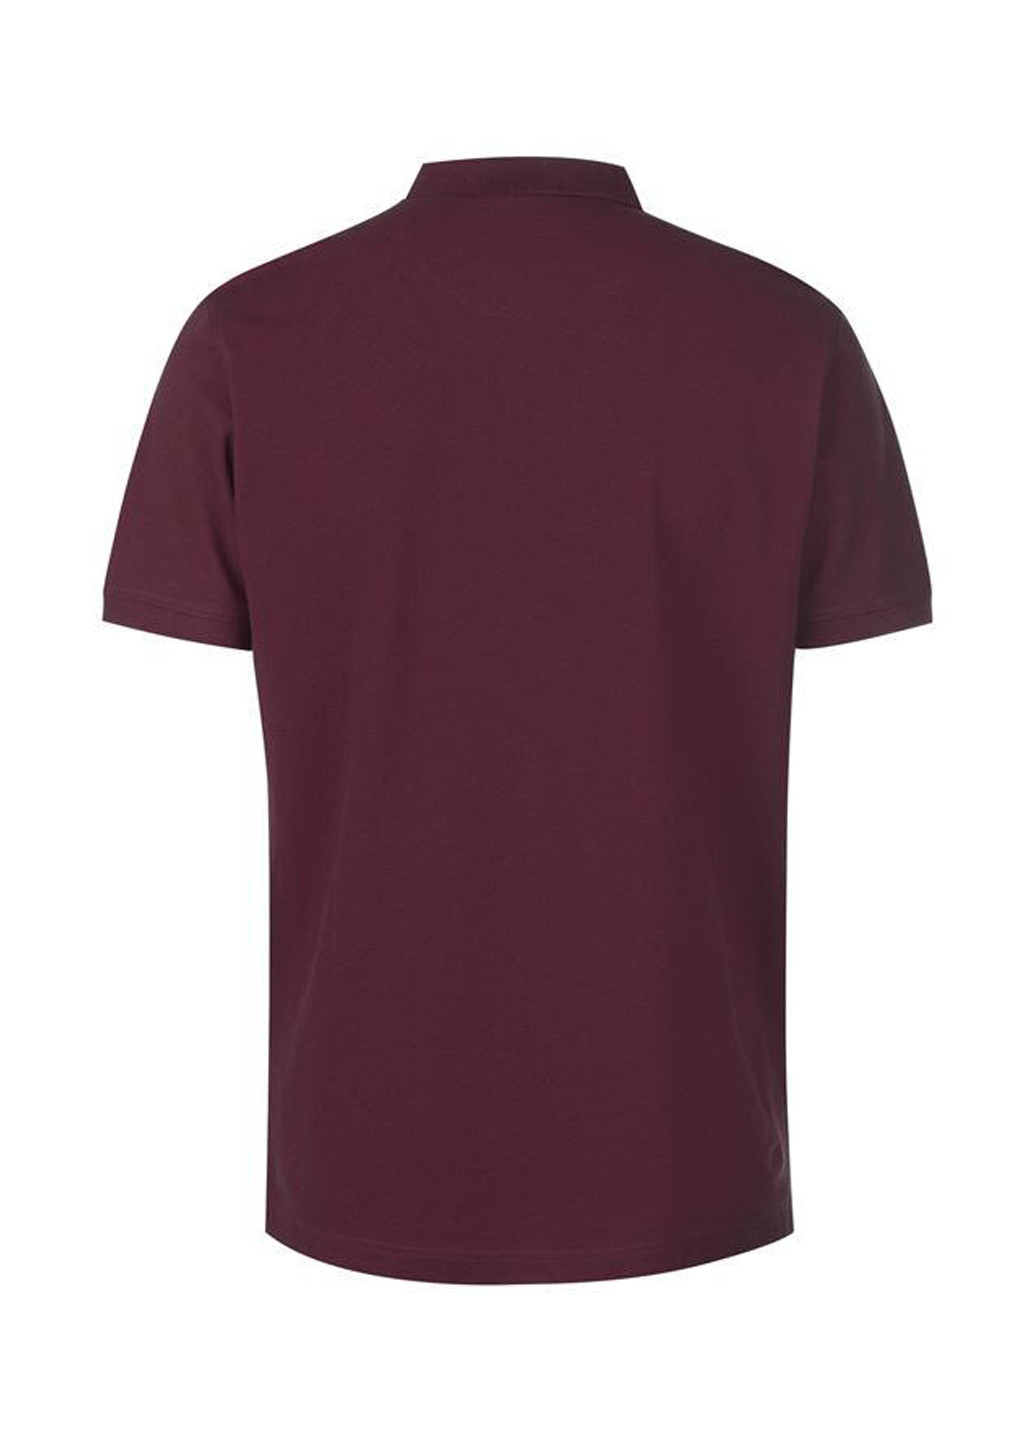 Бордовая футболка-поло для мужчин Pierre Cardin однотонная